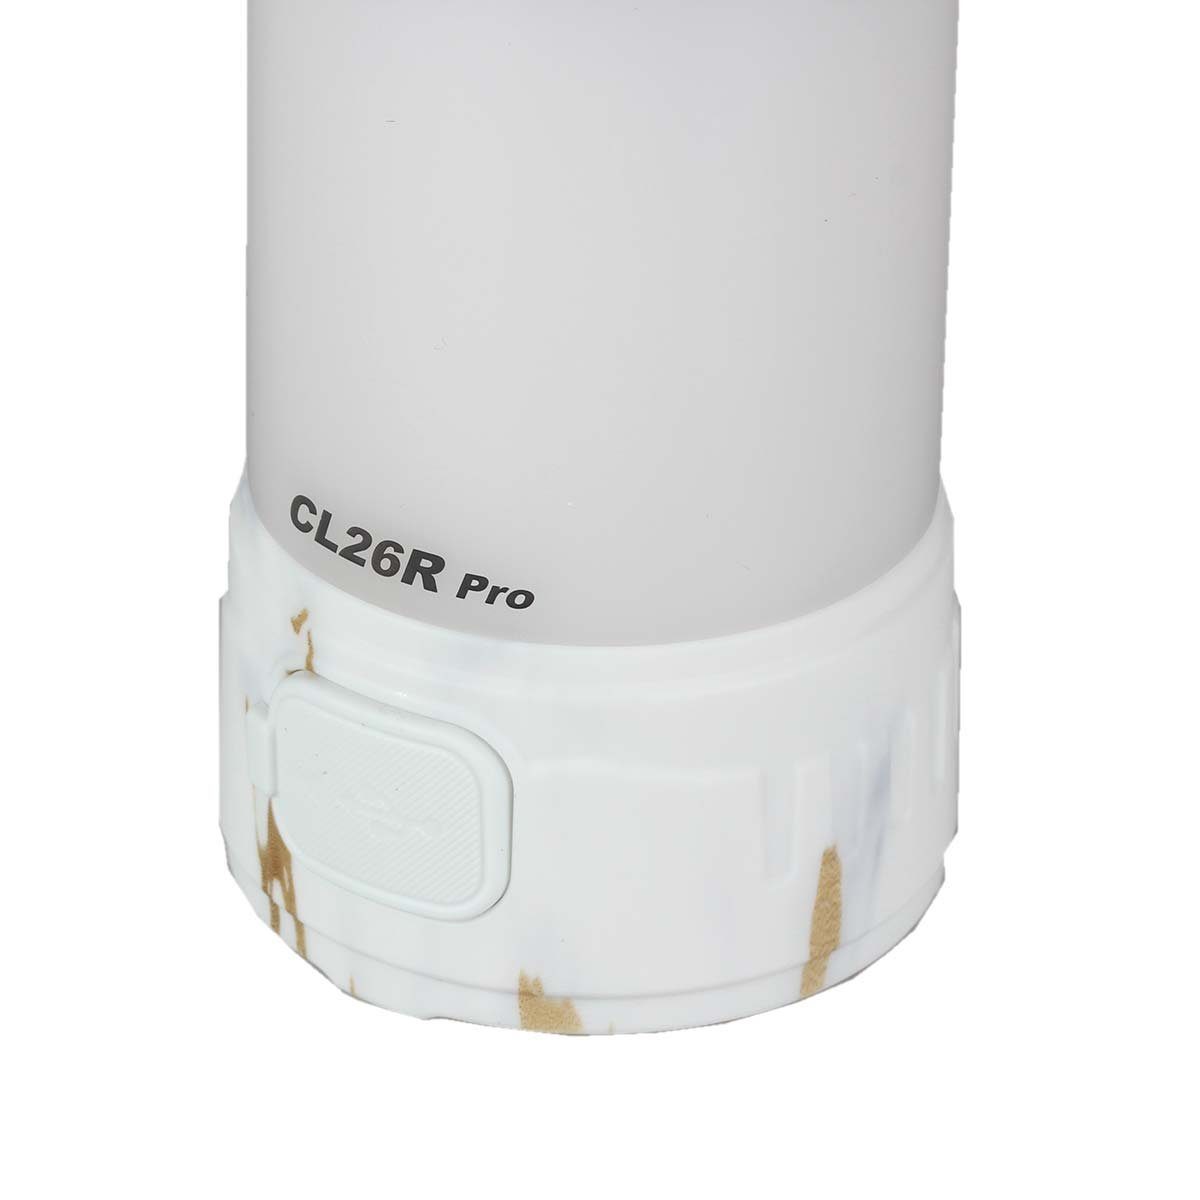 Taschenlampe White Marble Lumen Pro LED Anschluss Fenix 650 mit Campingleuchte USB LED CL26R